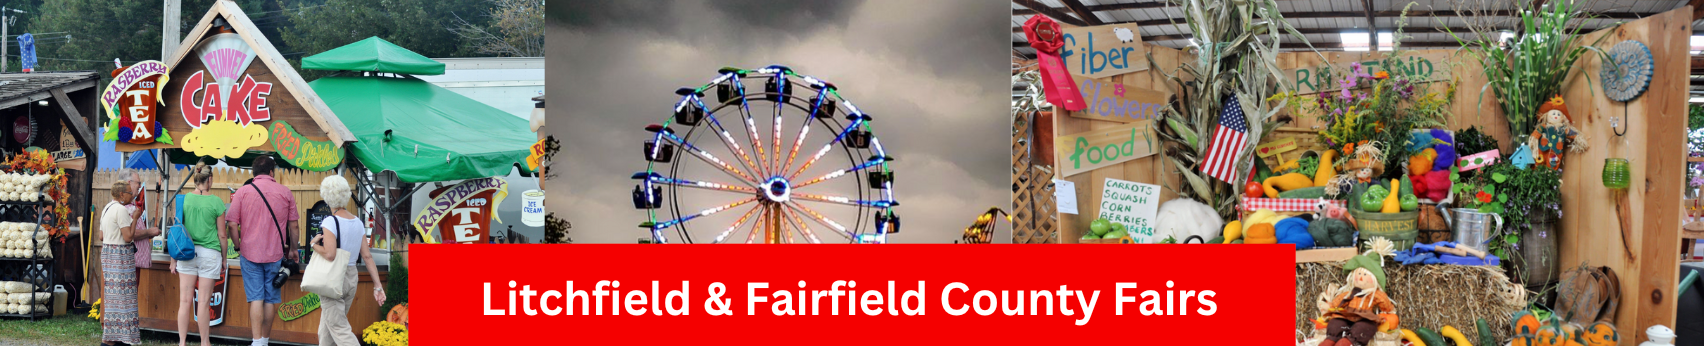 litchfield fairfield county fairs